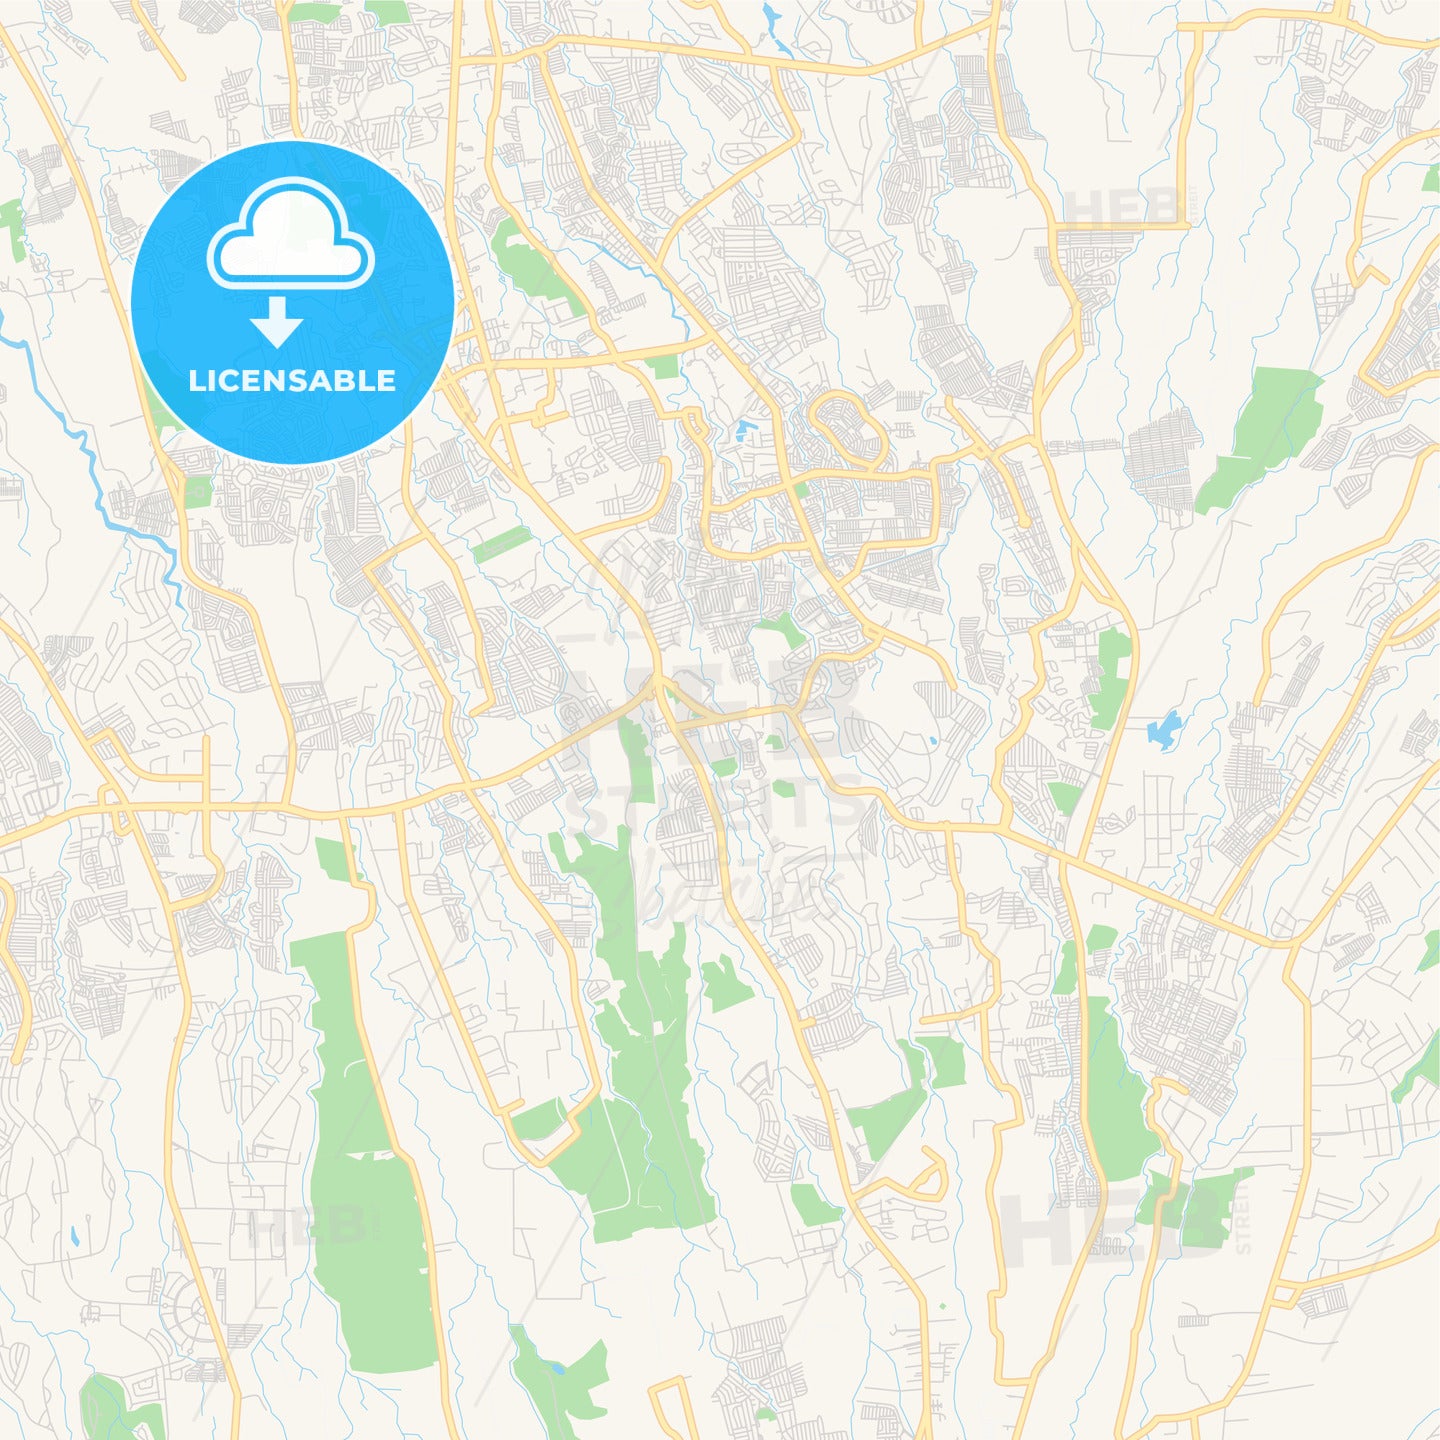 Printable street map of Dasmariñas, Philippines